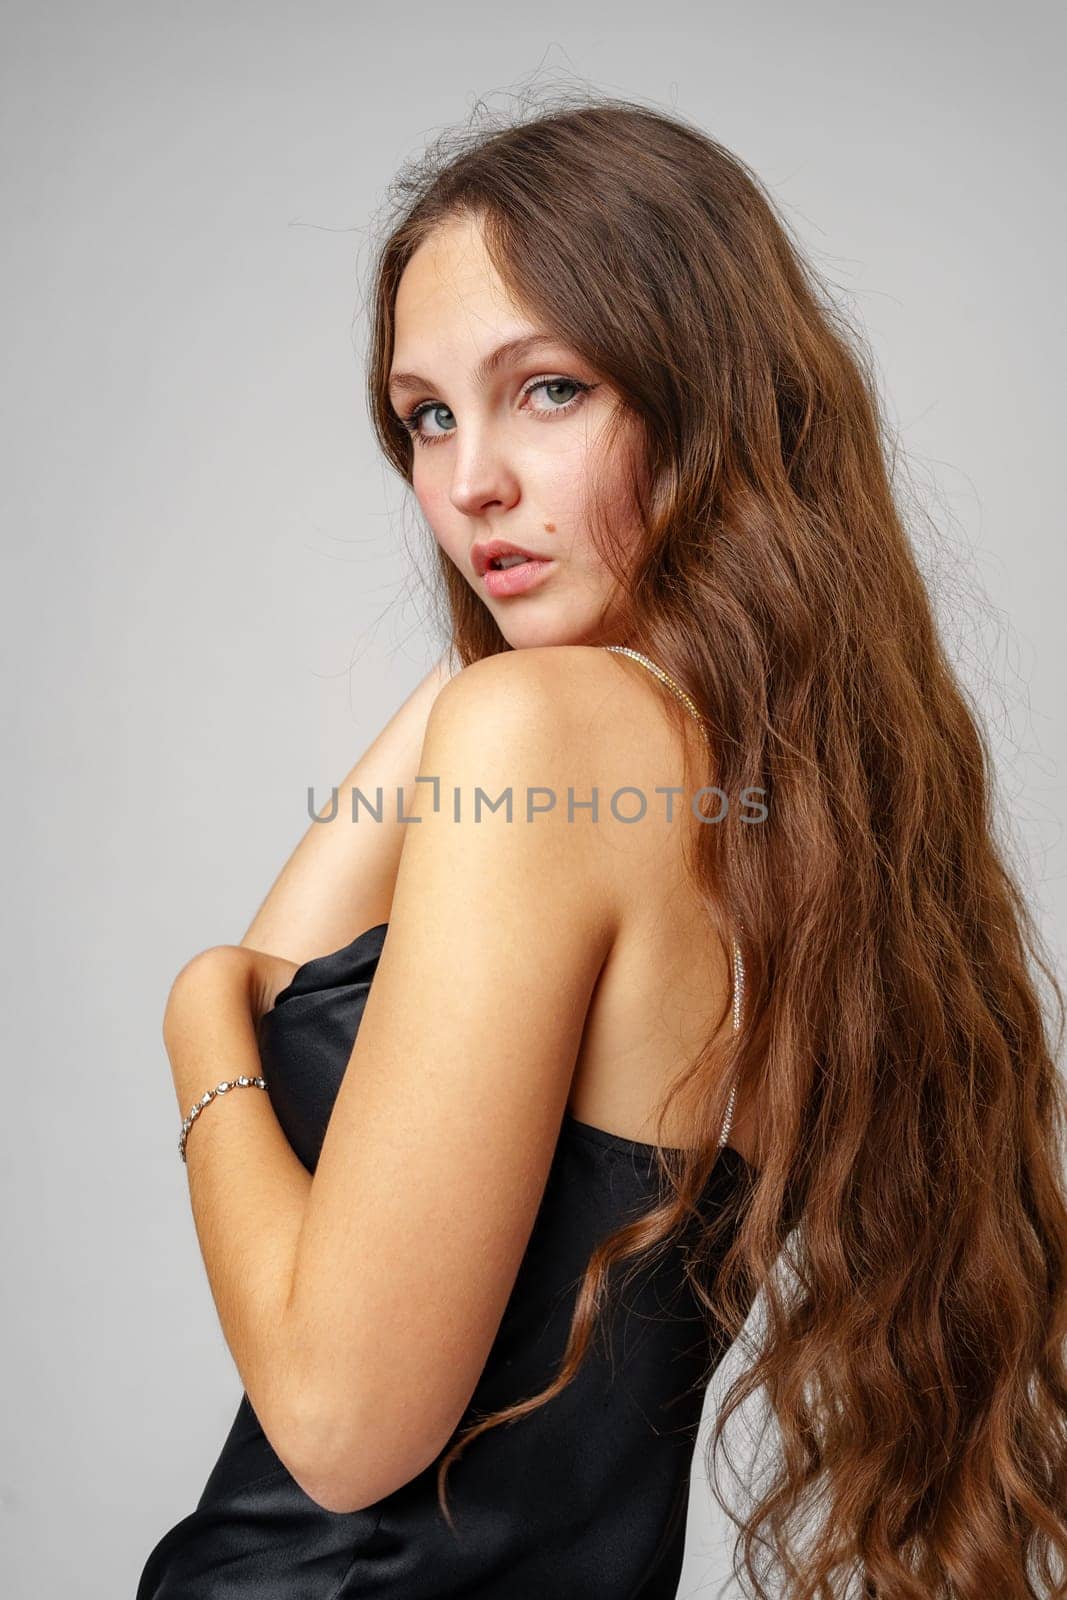 Elegant Young Woman Posing in a Black Dress Against a Grey Backdrop by Fabrikasimf